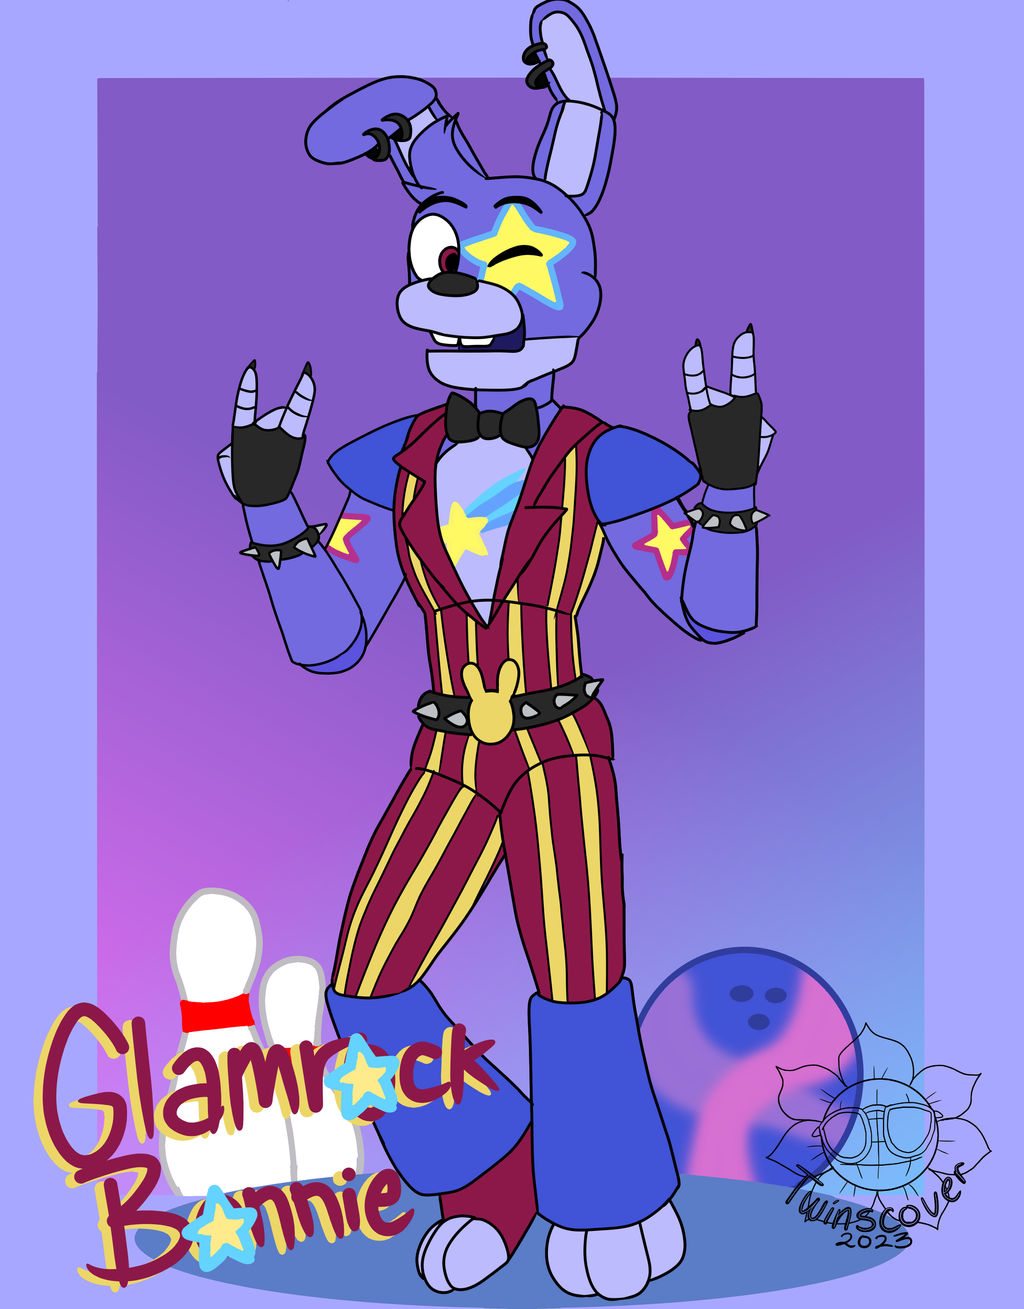 Glamrock Bonnie by StarsBon28112 on DeviantArt